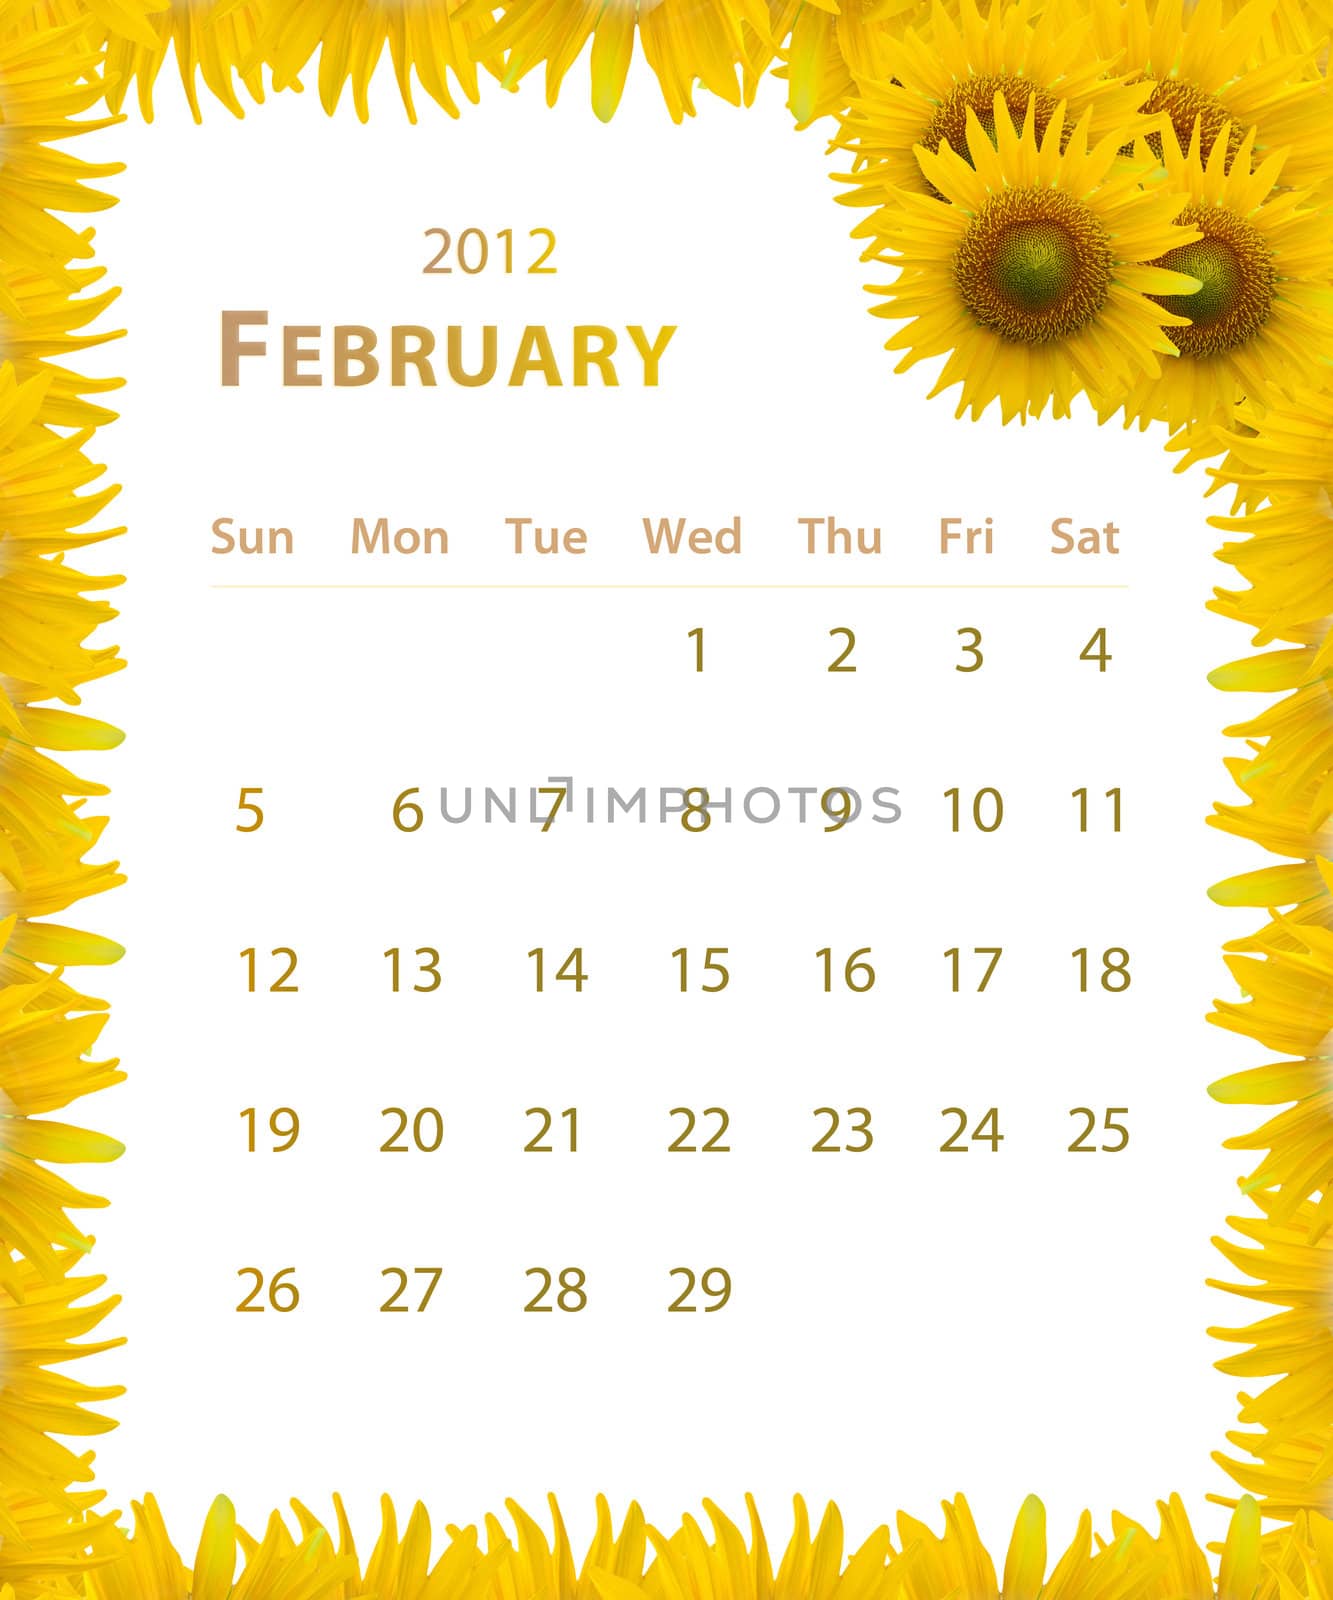 2012 year calendar ,February with Sunflower frame design